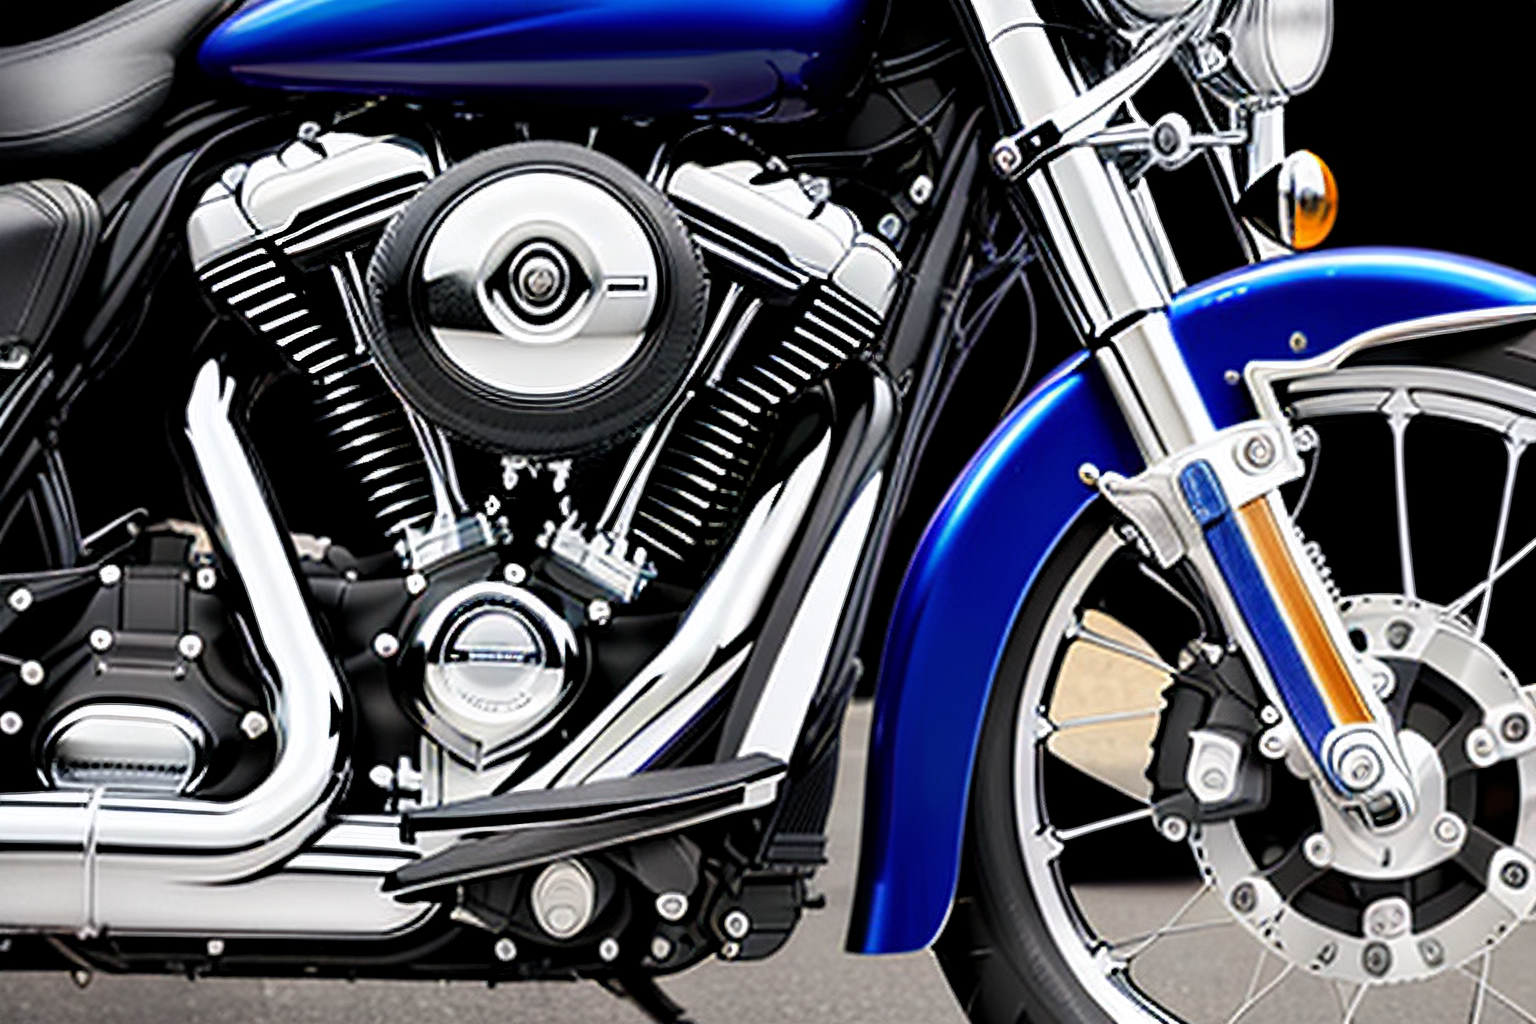 Harley Davidson Front Forks Problems: Analysis